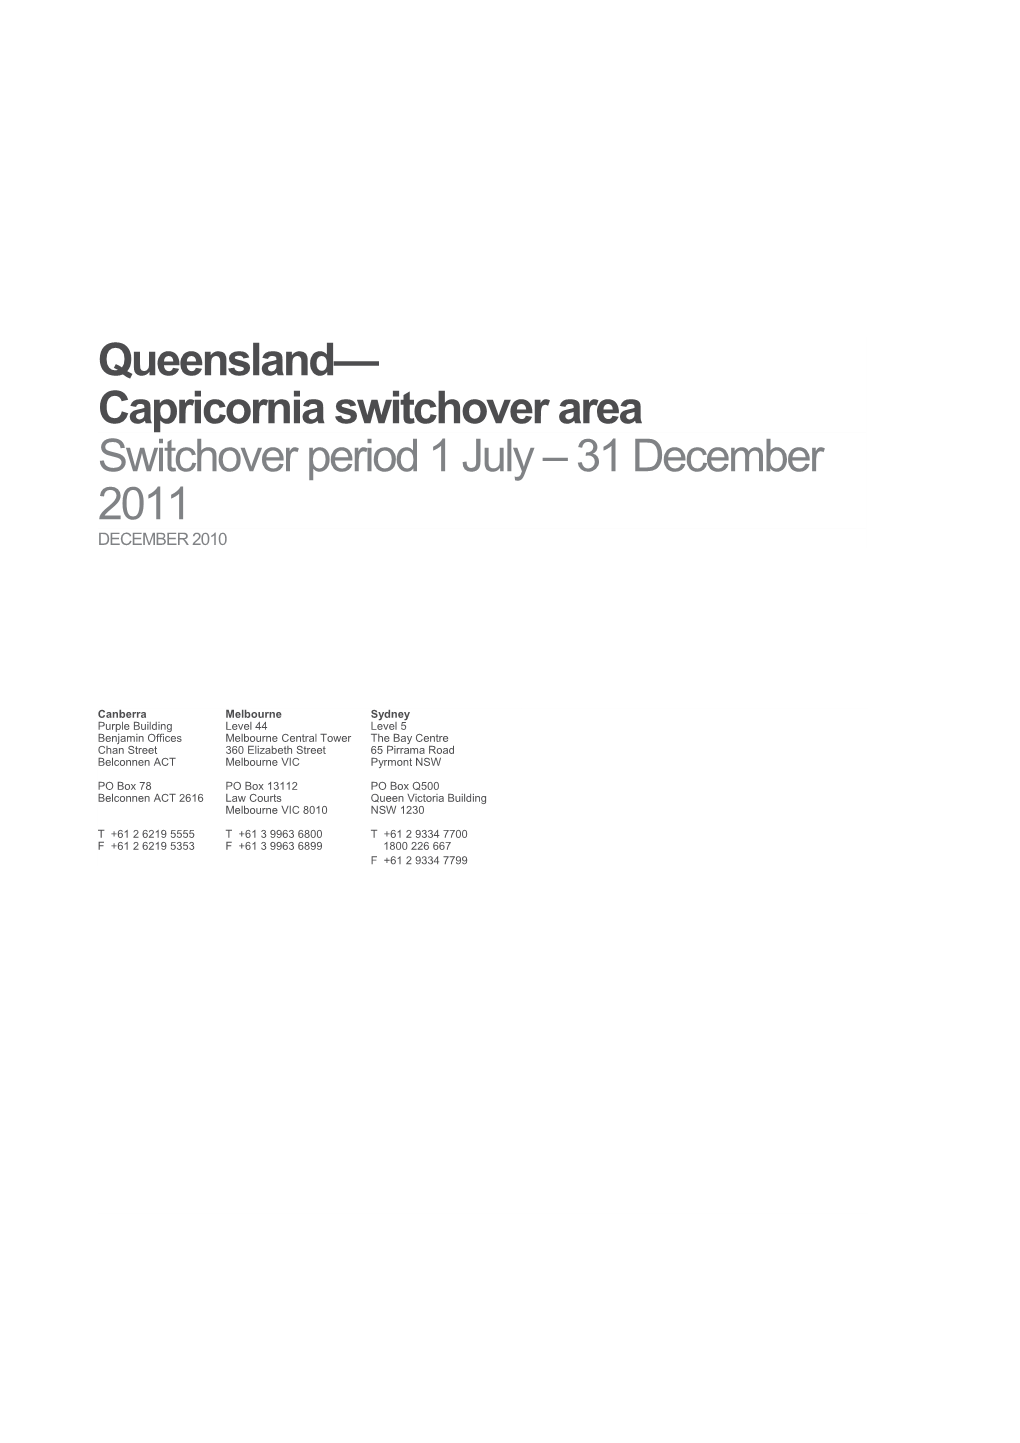 Queensland Capricornia Switchover Area